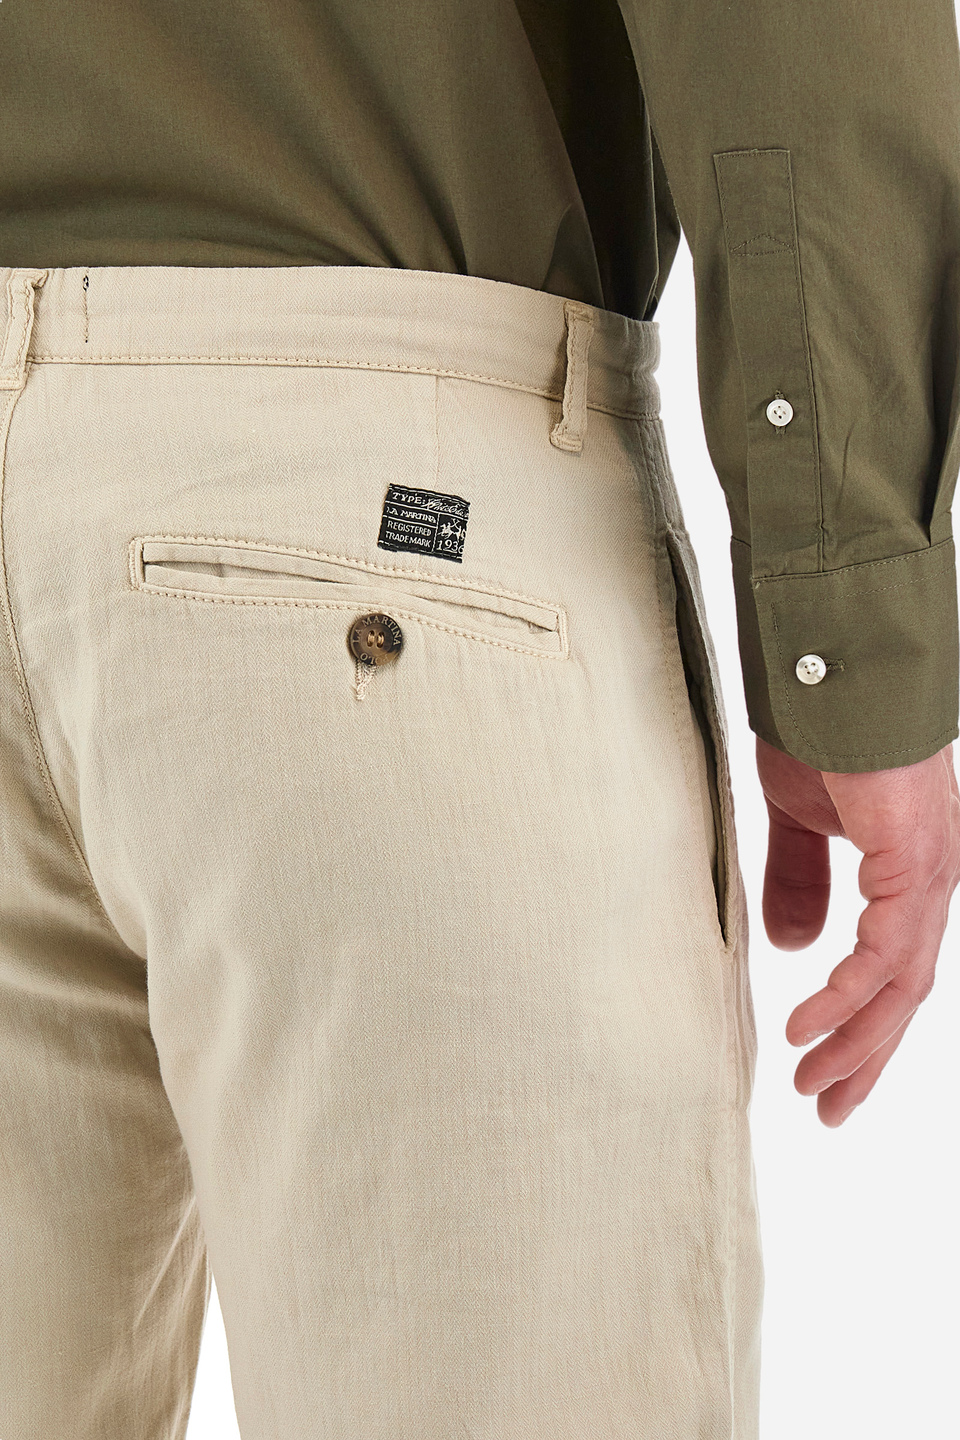 Pantalone chino regular fit in cotone e lino - Yasuhiko | La Martina - Official Online Shop